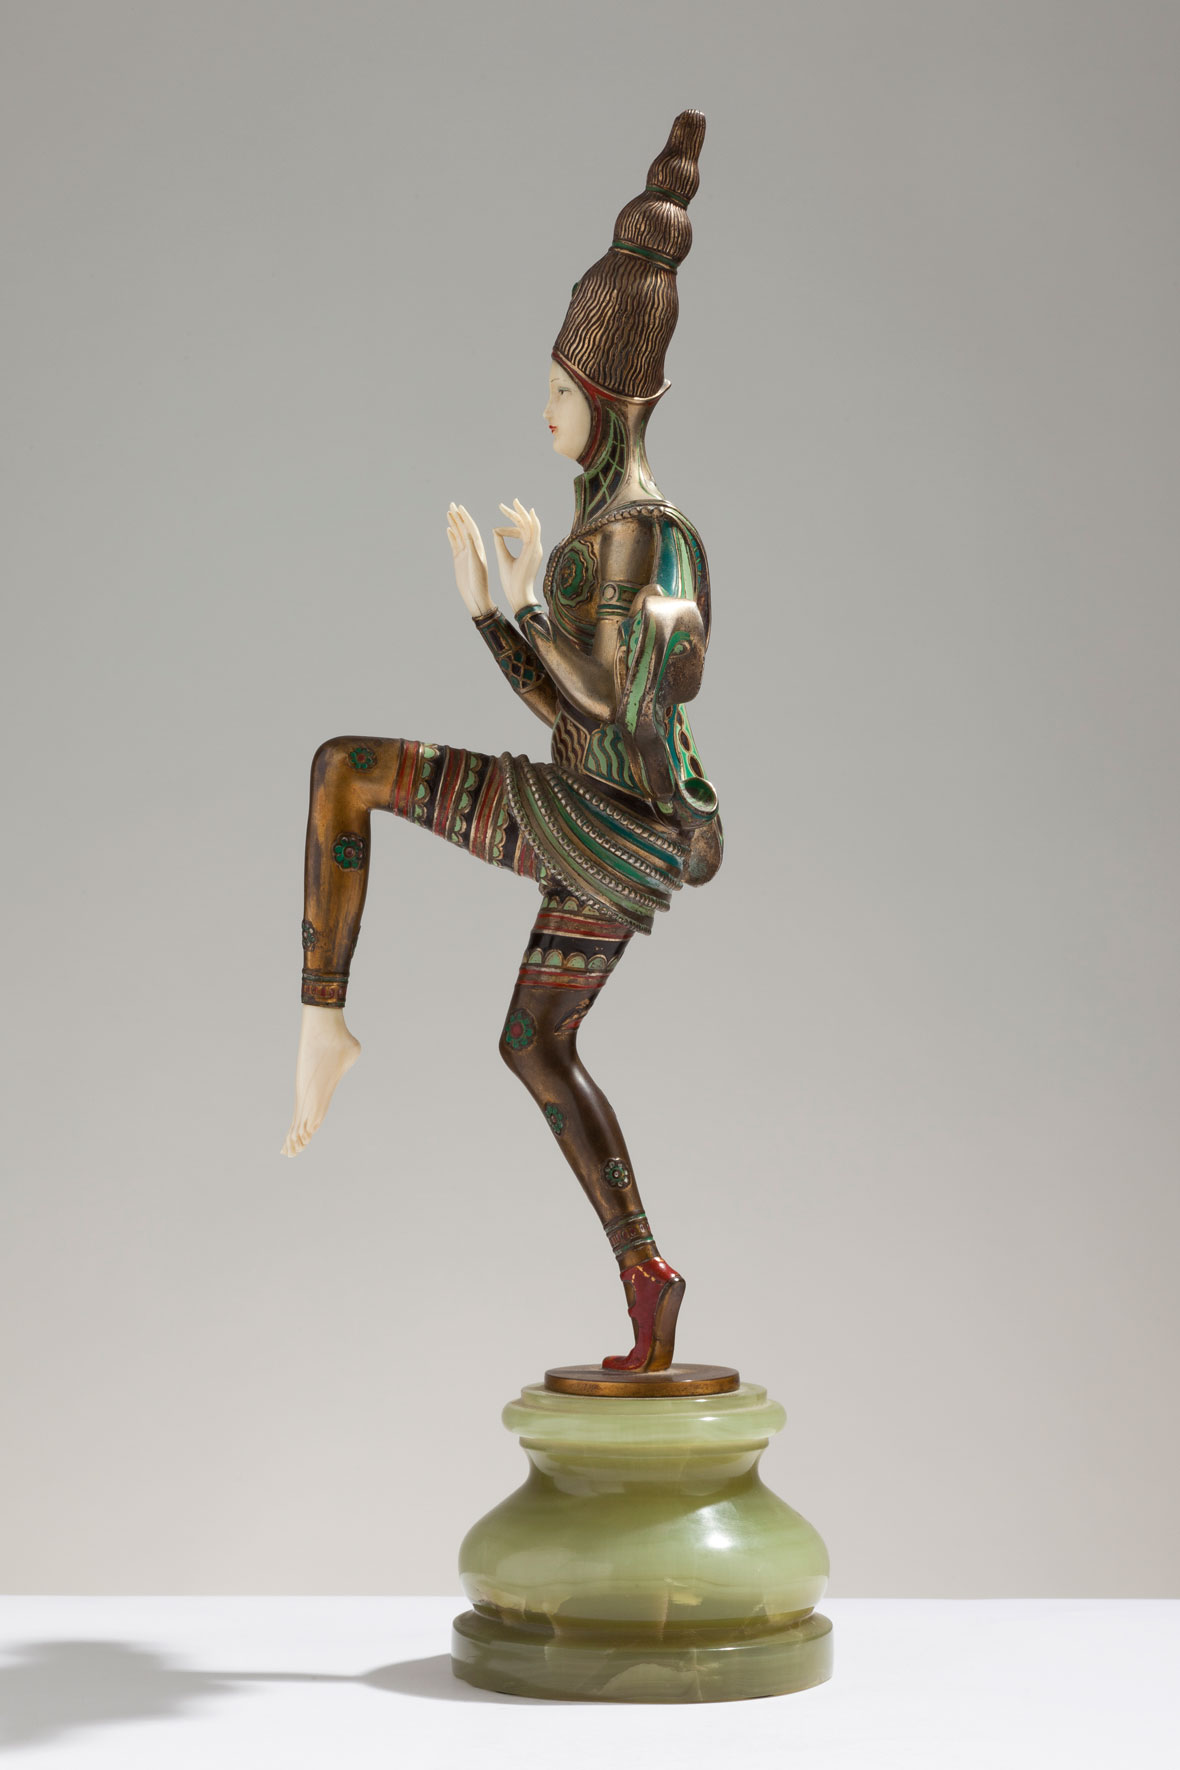 Temple Dancer by Gerdago